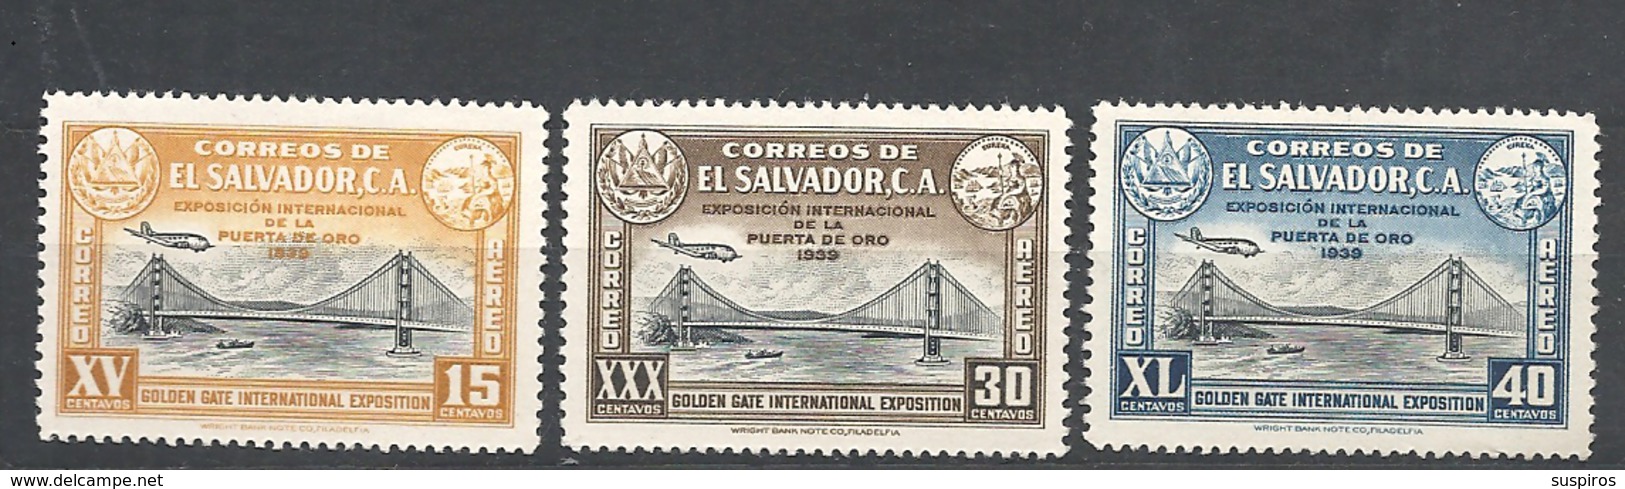 EL SALVADOR  1939 Airmail - Golden Gate International Exhibition - San Francisco, USA MNH LAST VALUE SOFTLY HINGED - El Salvador